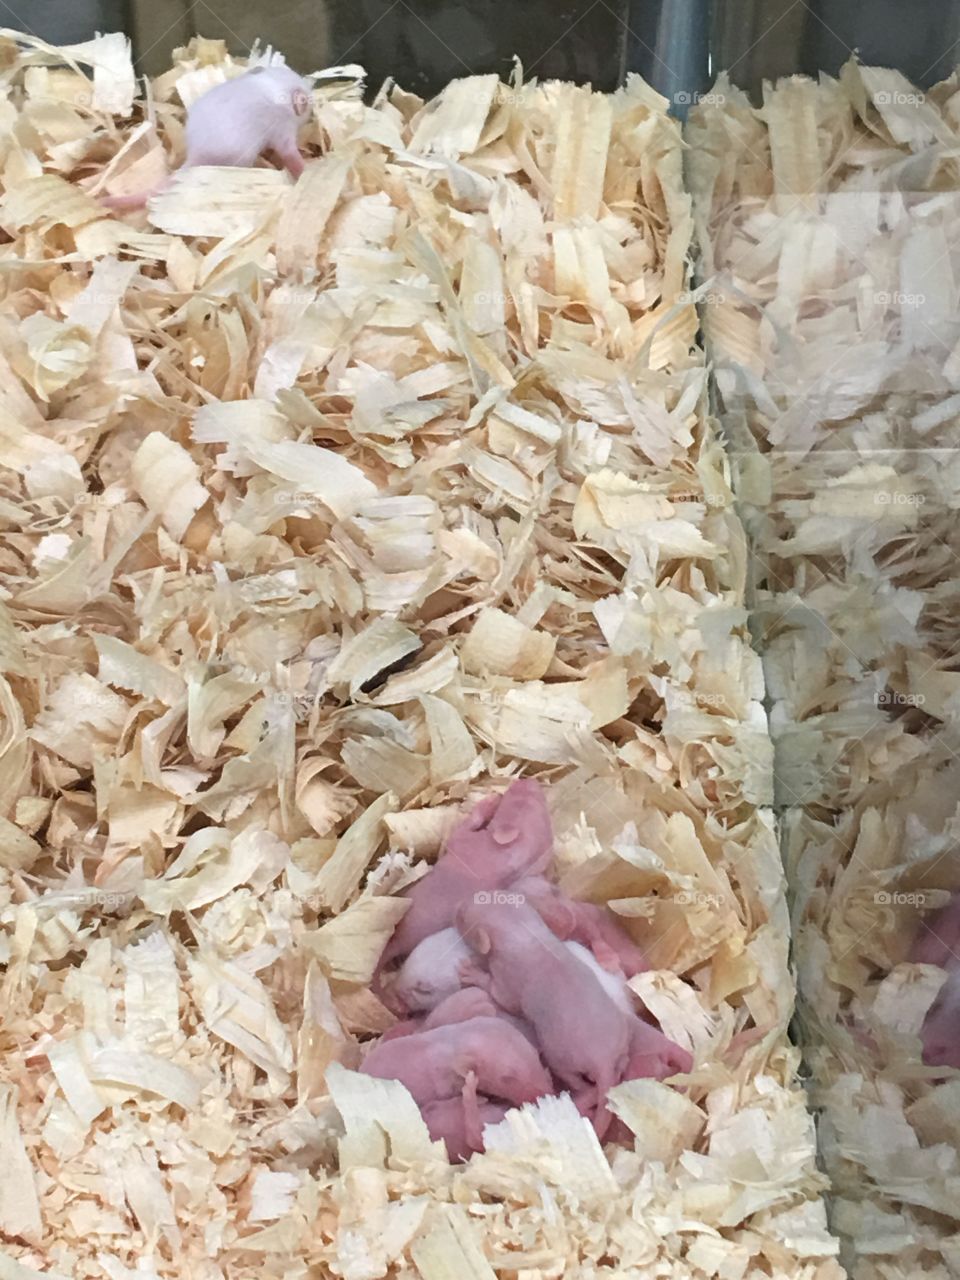 Baby mice!